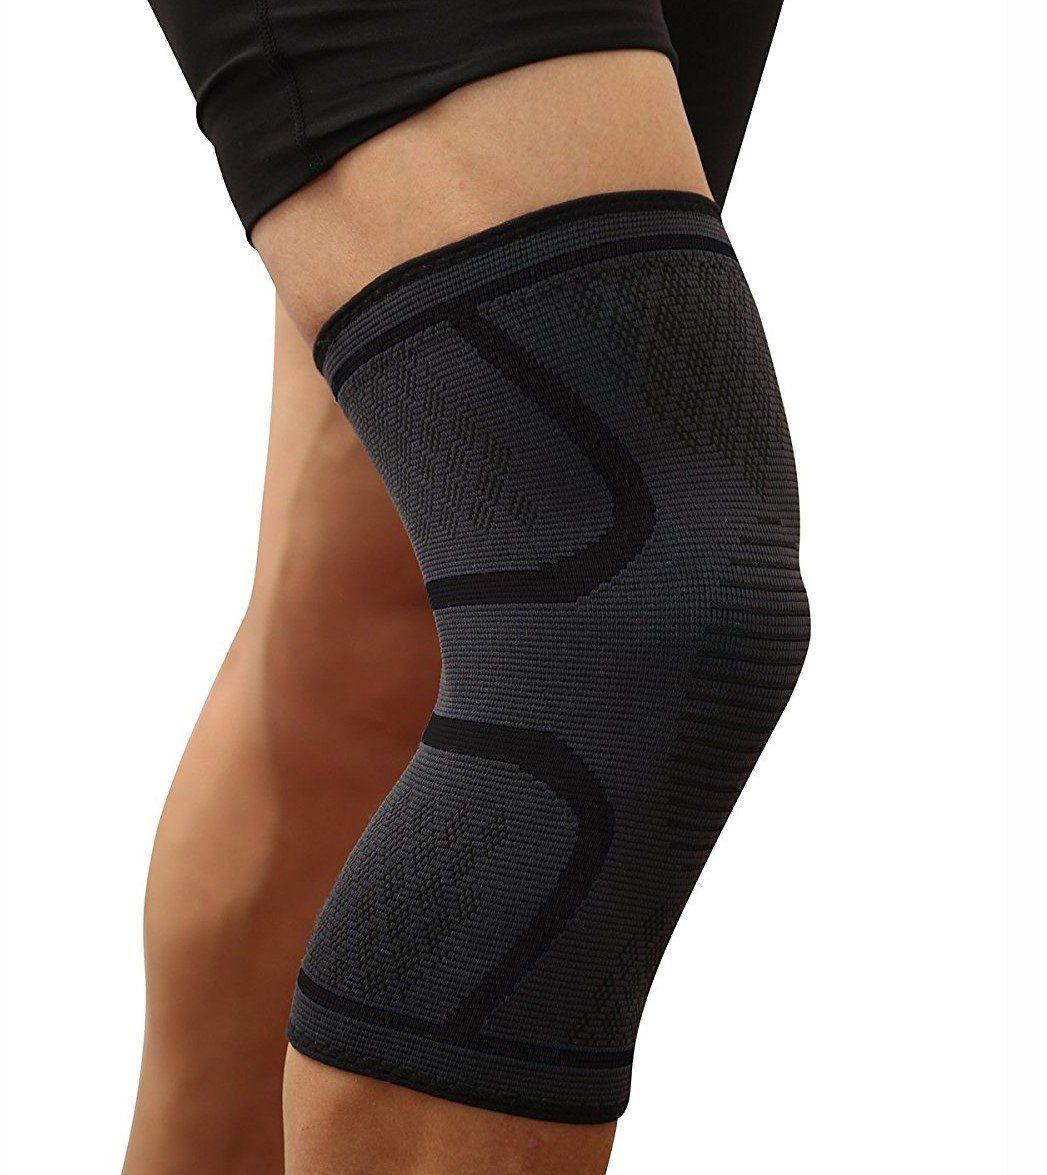 koprez knee compression sleeve